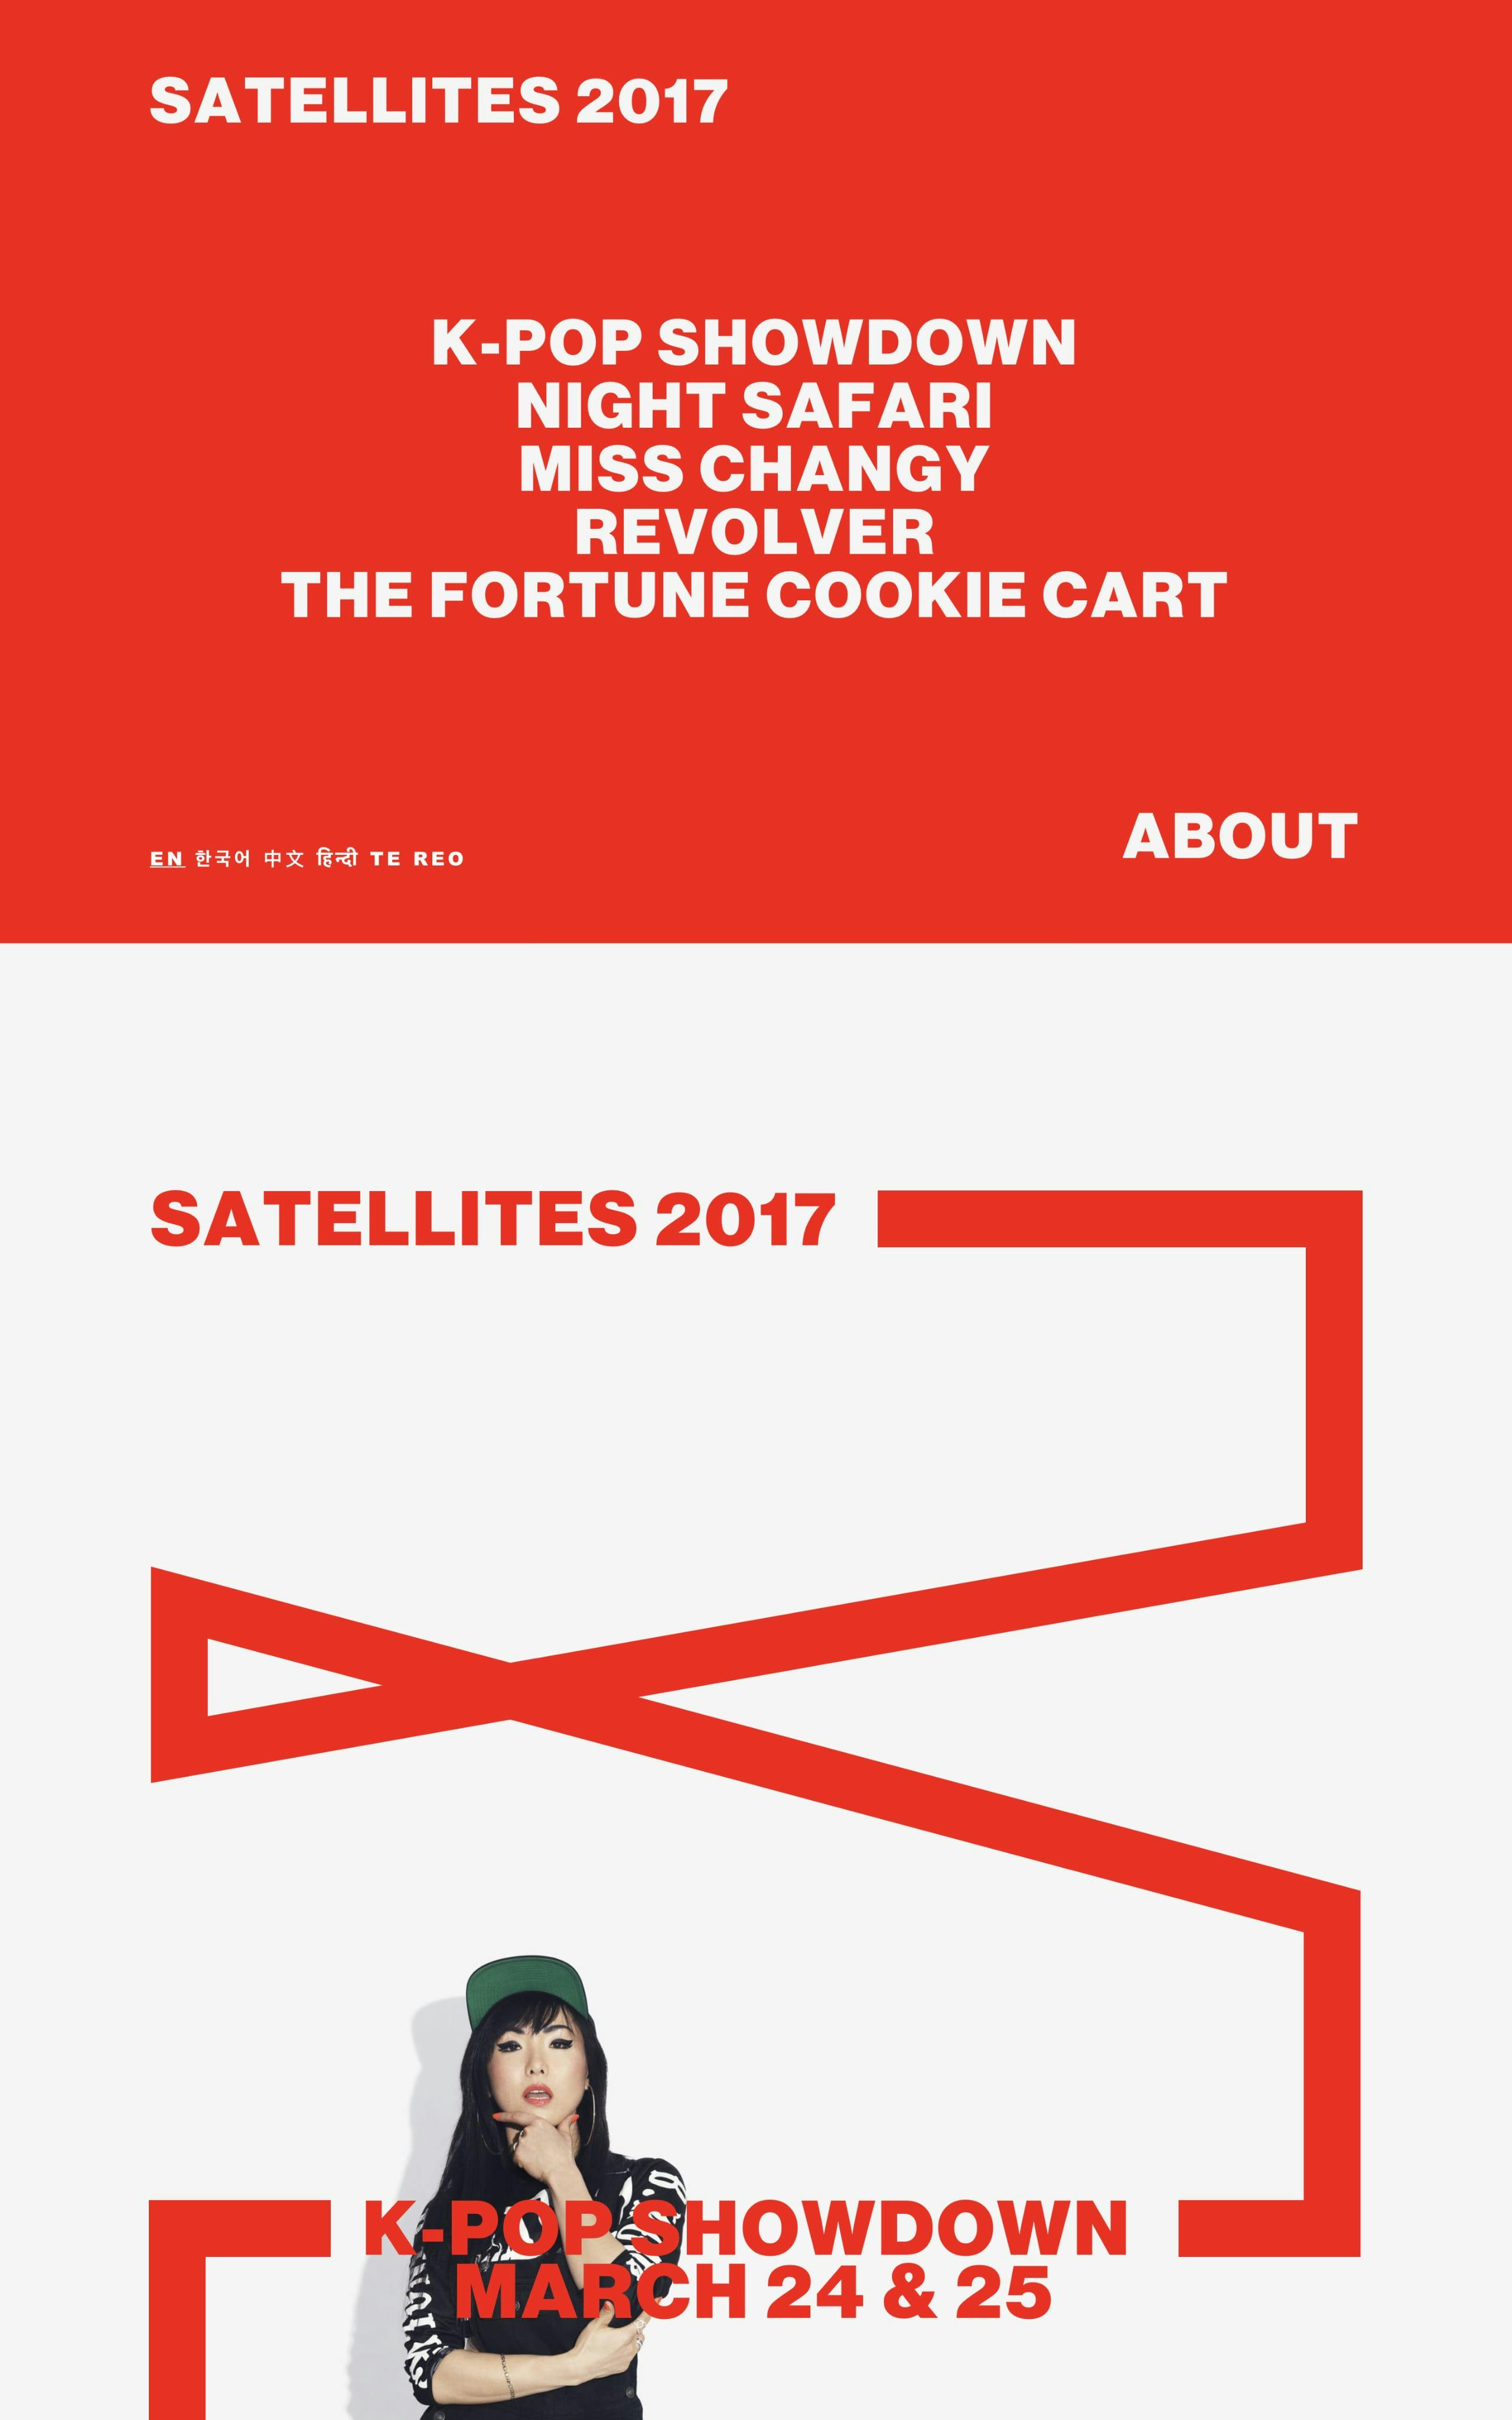 Satellites 2017 Website Screenshot